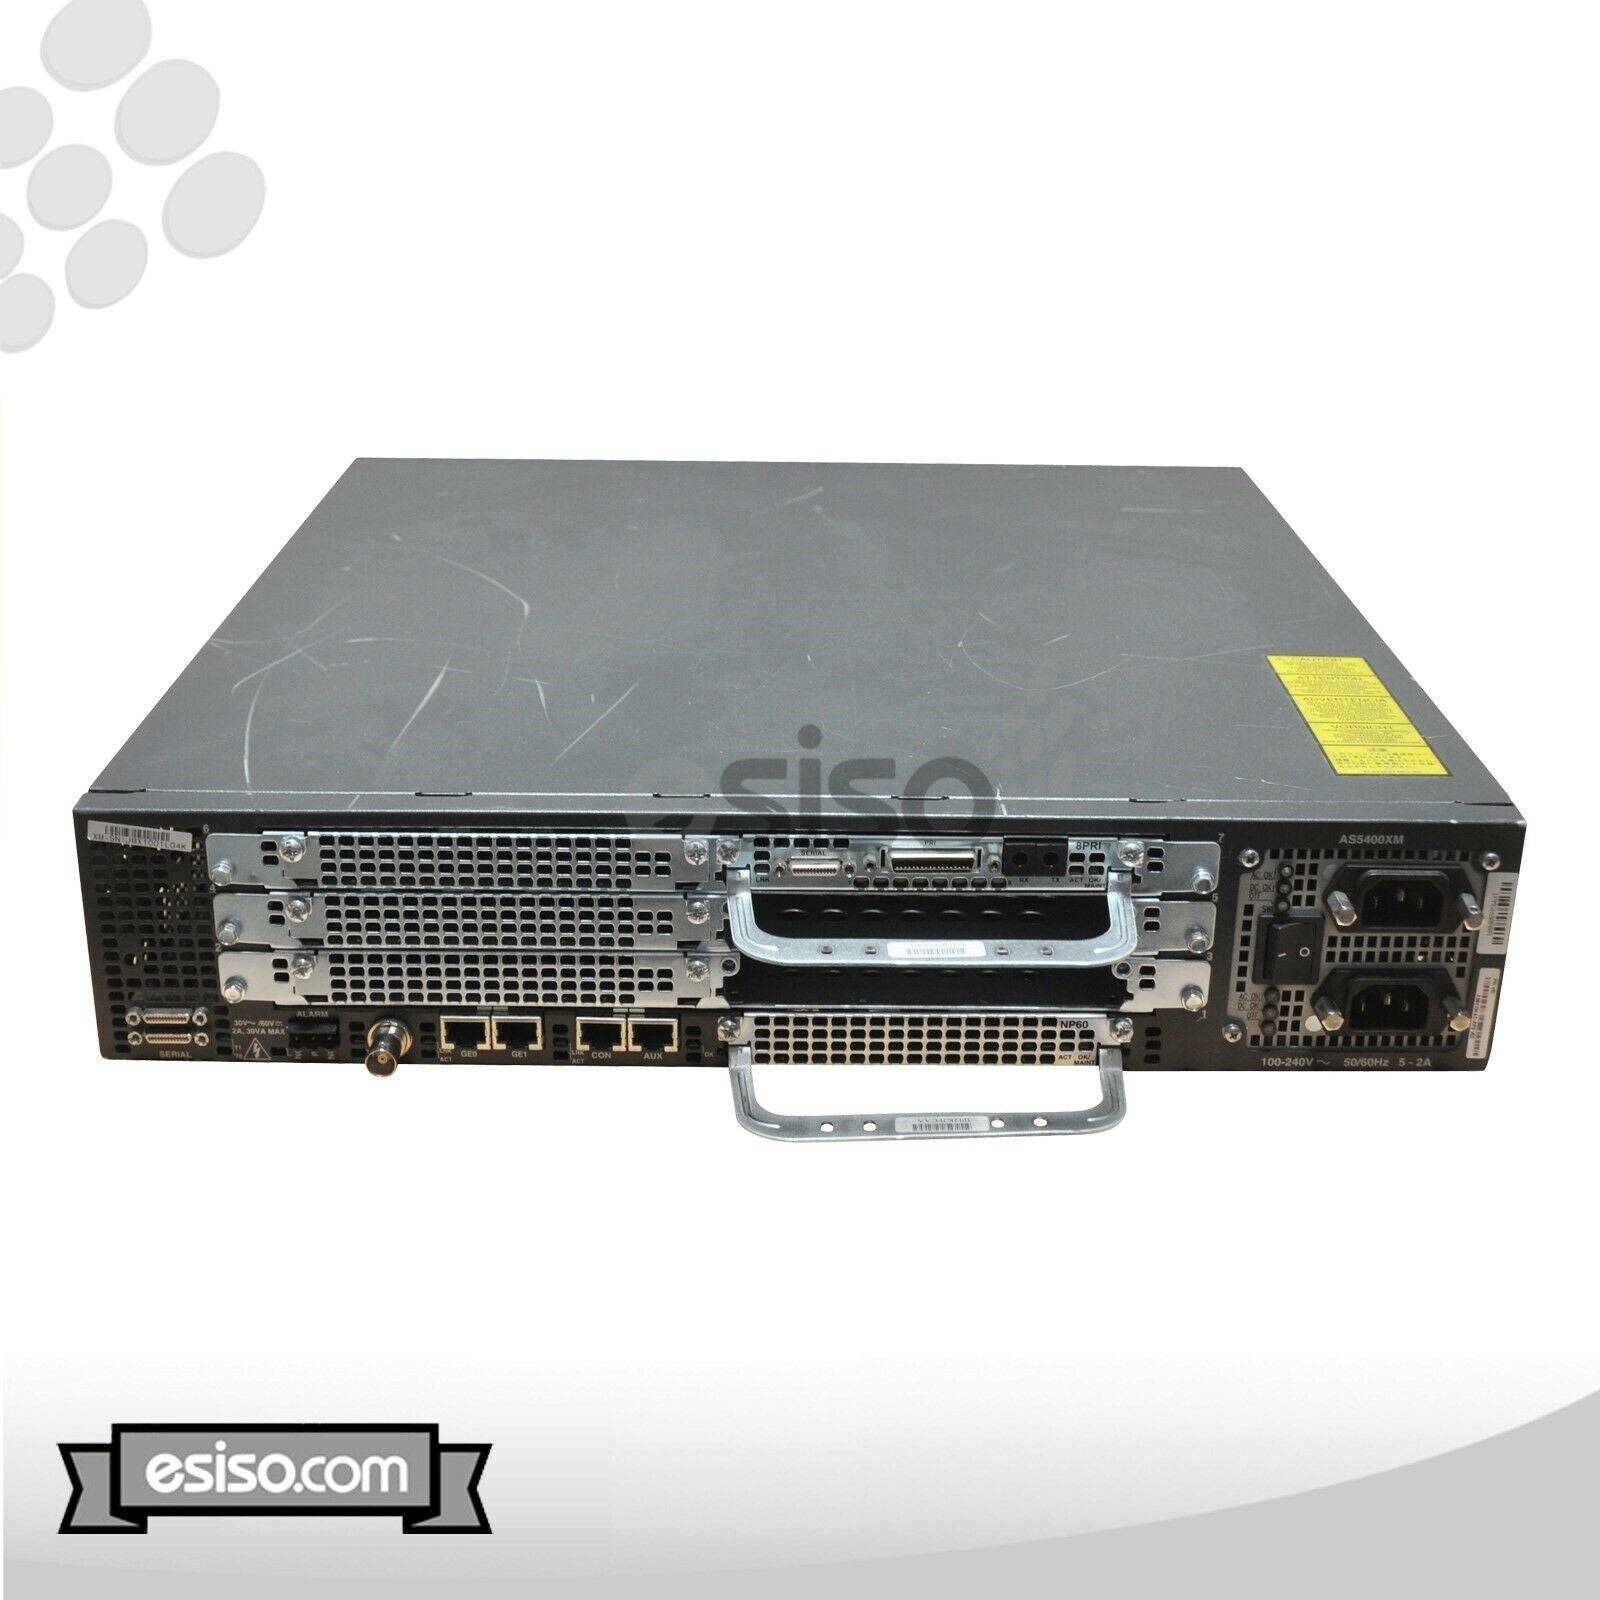 CISCO AS5400 Universal Access Gateway Router 2x 10/100/1000 AS54XM-AC-RPS MH